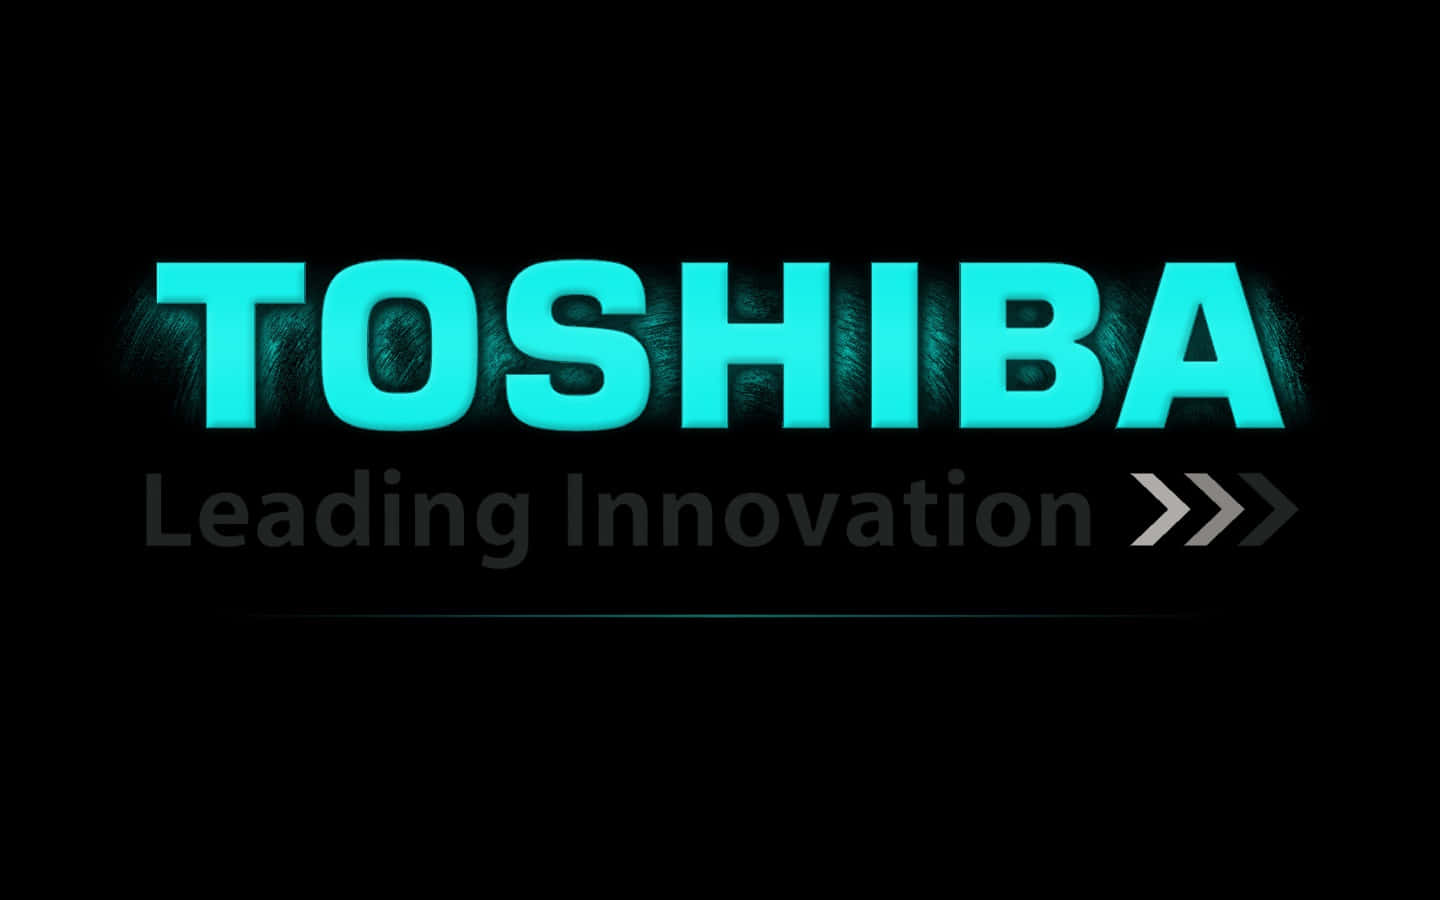 toshiba leading innovation wallpapers